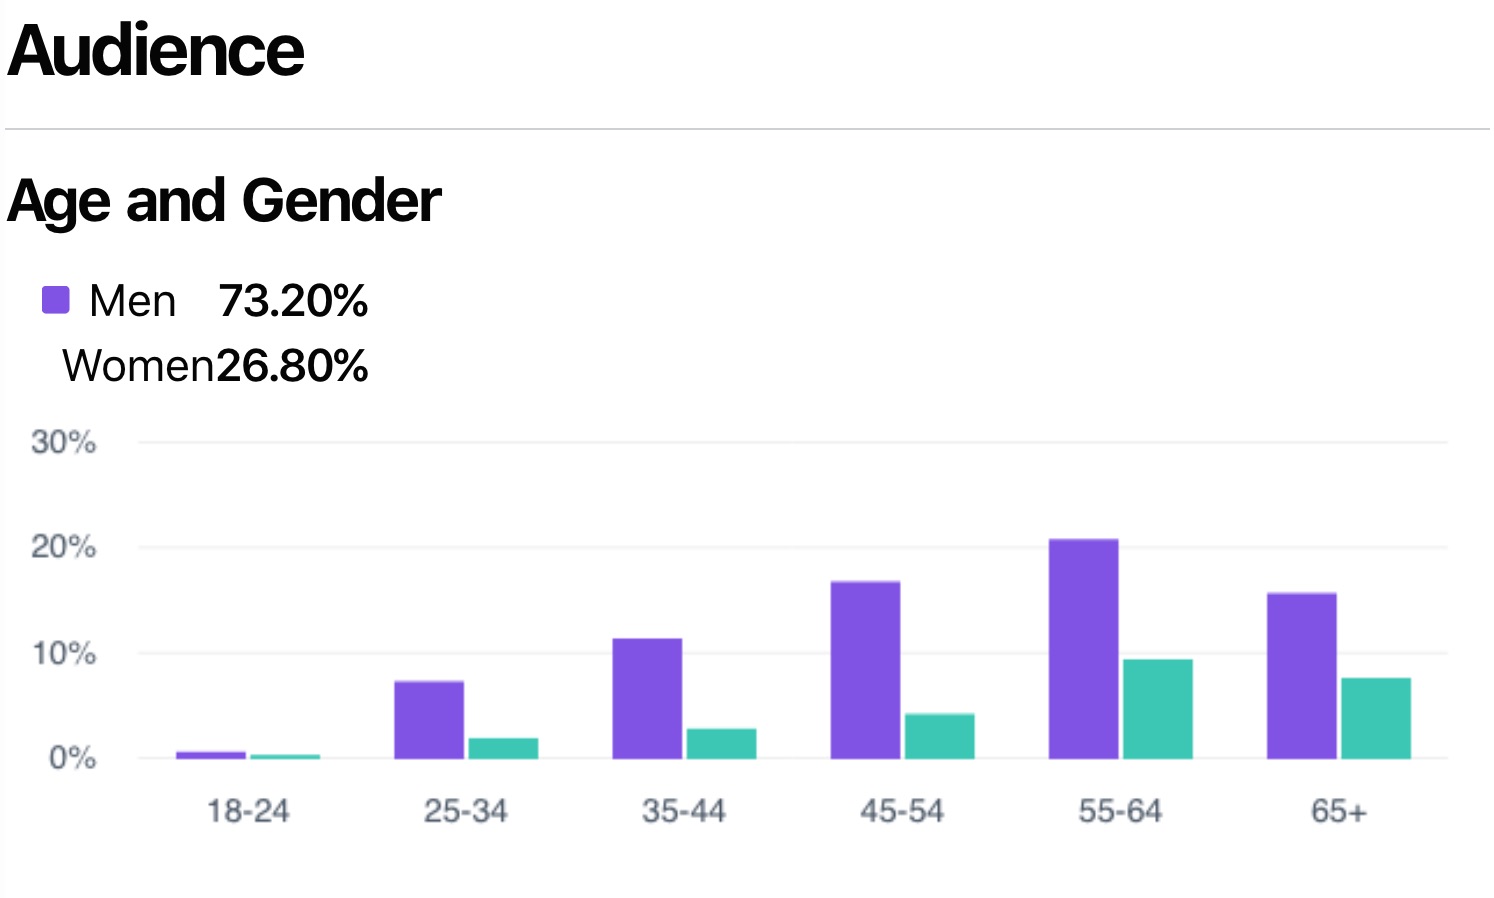 Audience

Age and Gender

® Men 73.20%
Women26.80%

30%

20%

18-24 25-34 35-44 45-54

N Bl i i 1
0% a [| ml i -

55-64